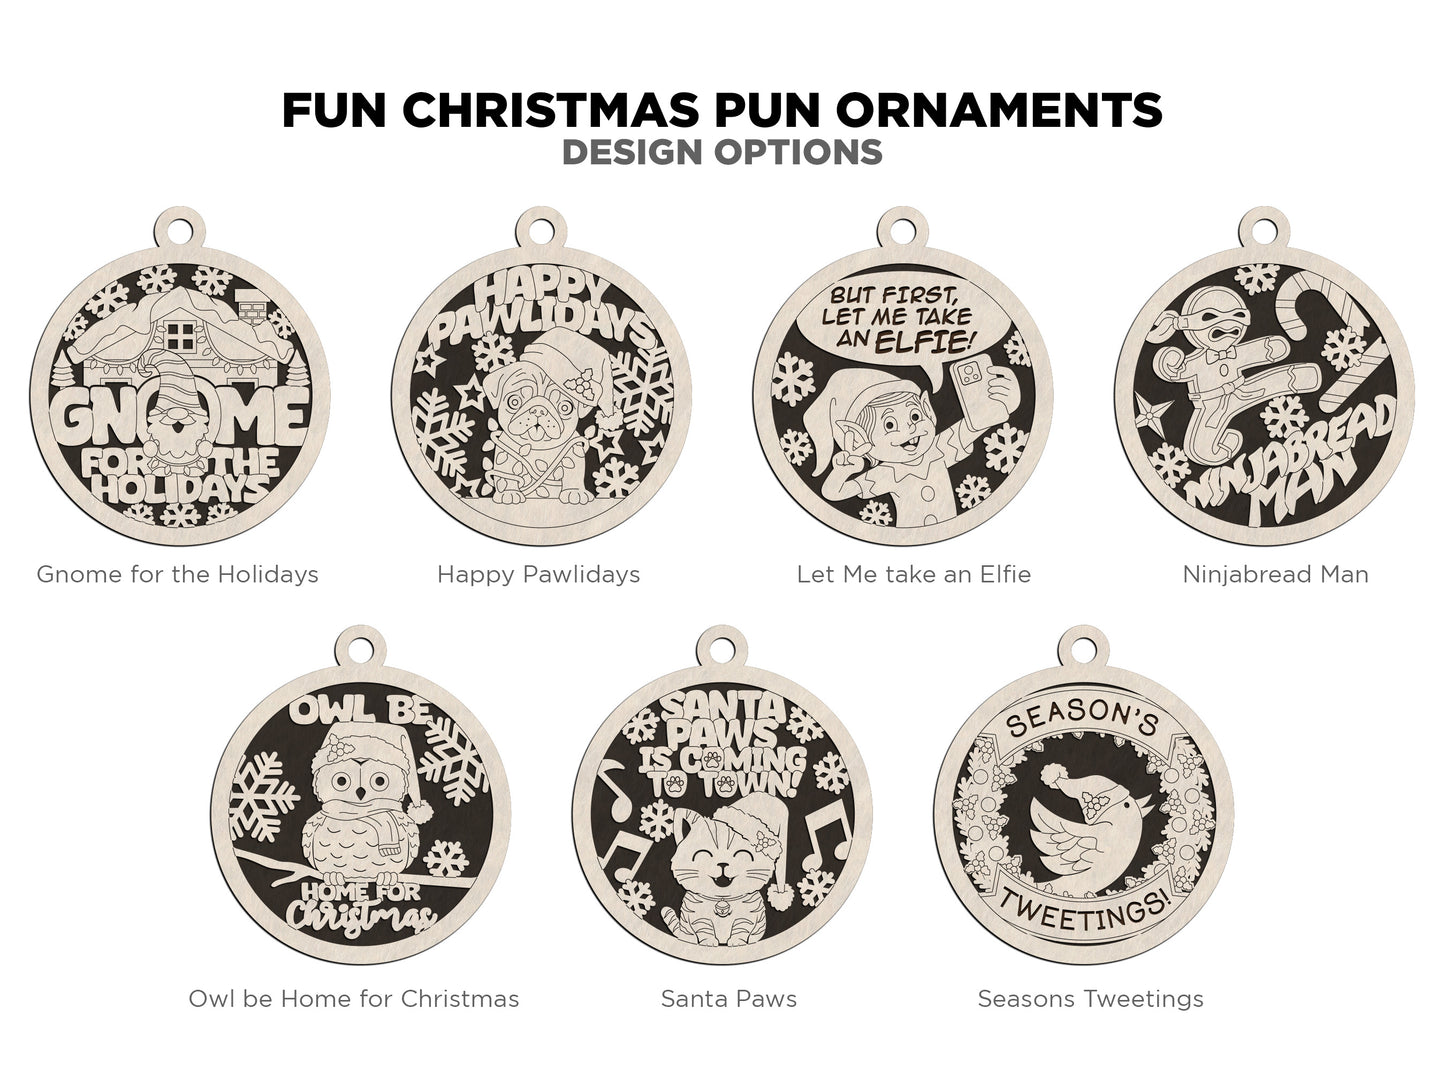 Fun Christmas Puns - Laser Cut Wooden Christmas Ornaments